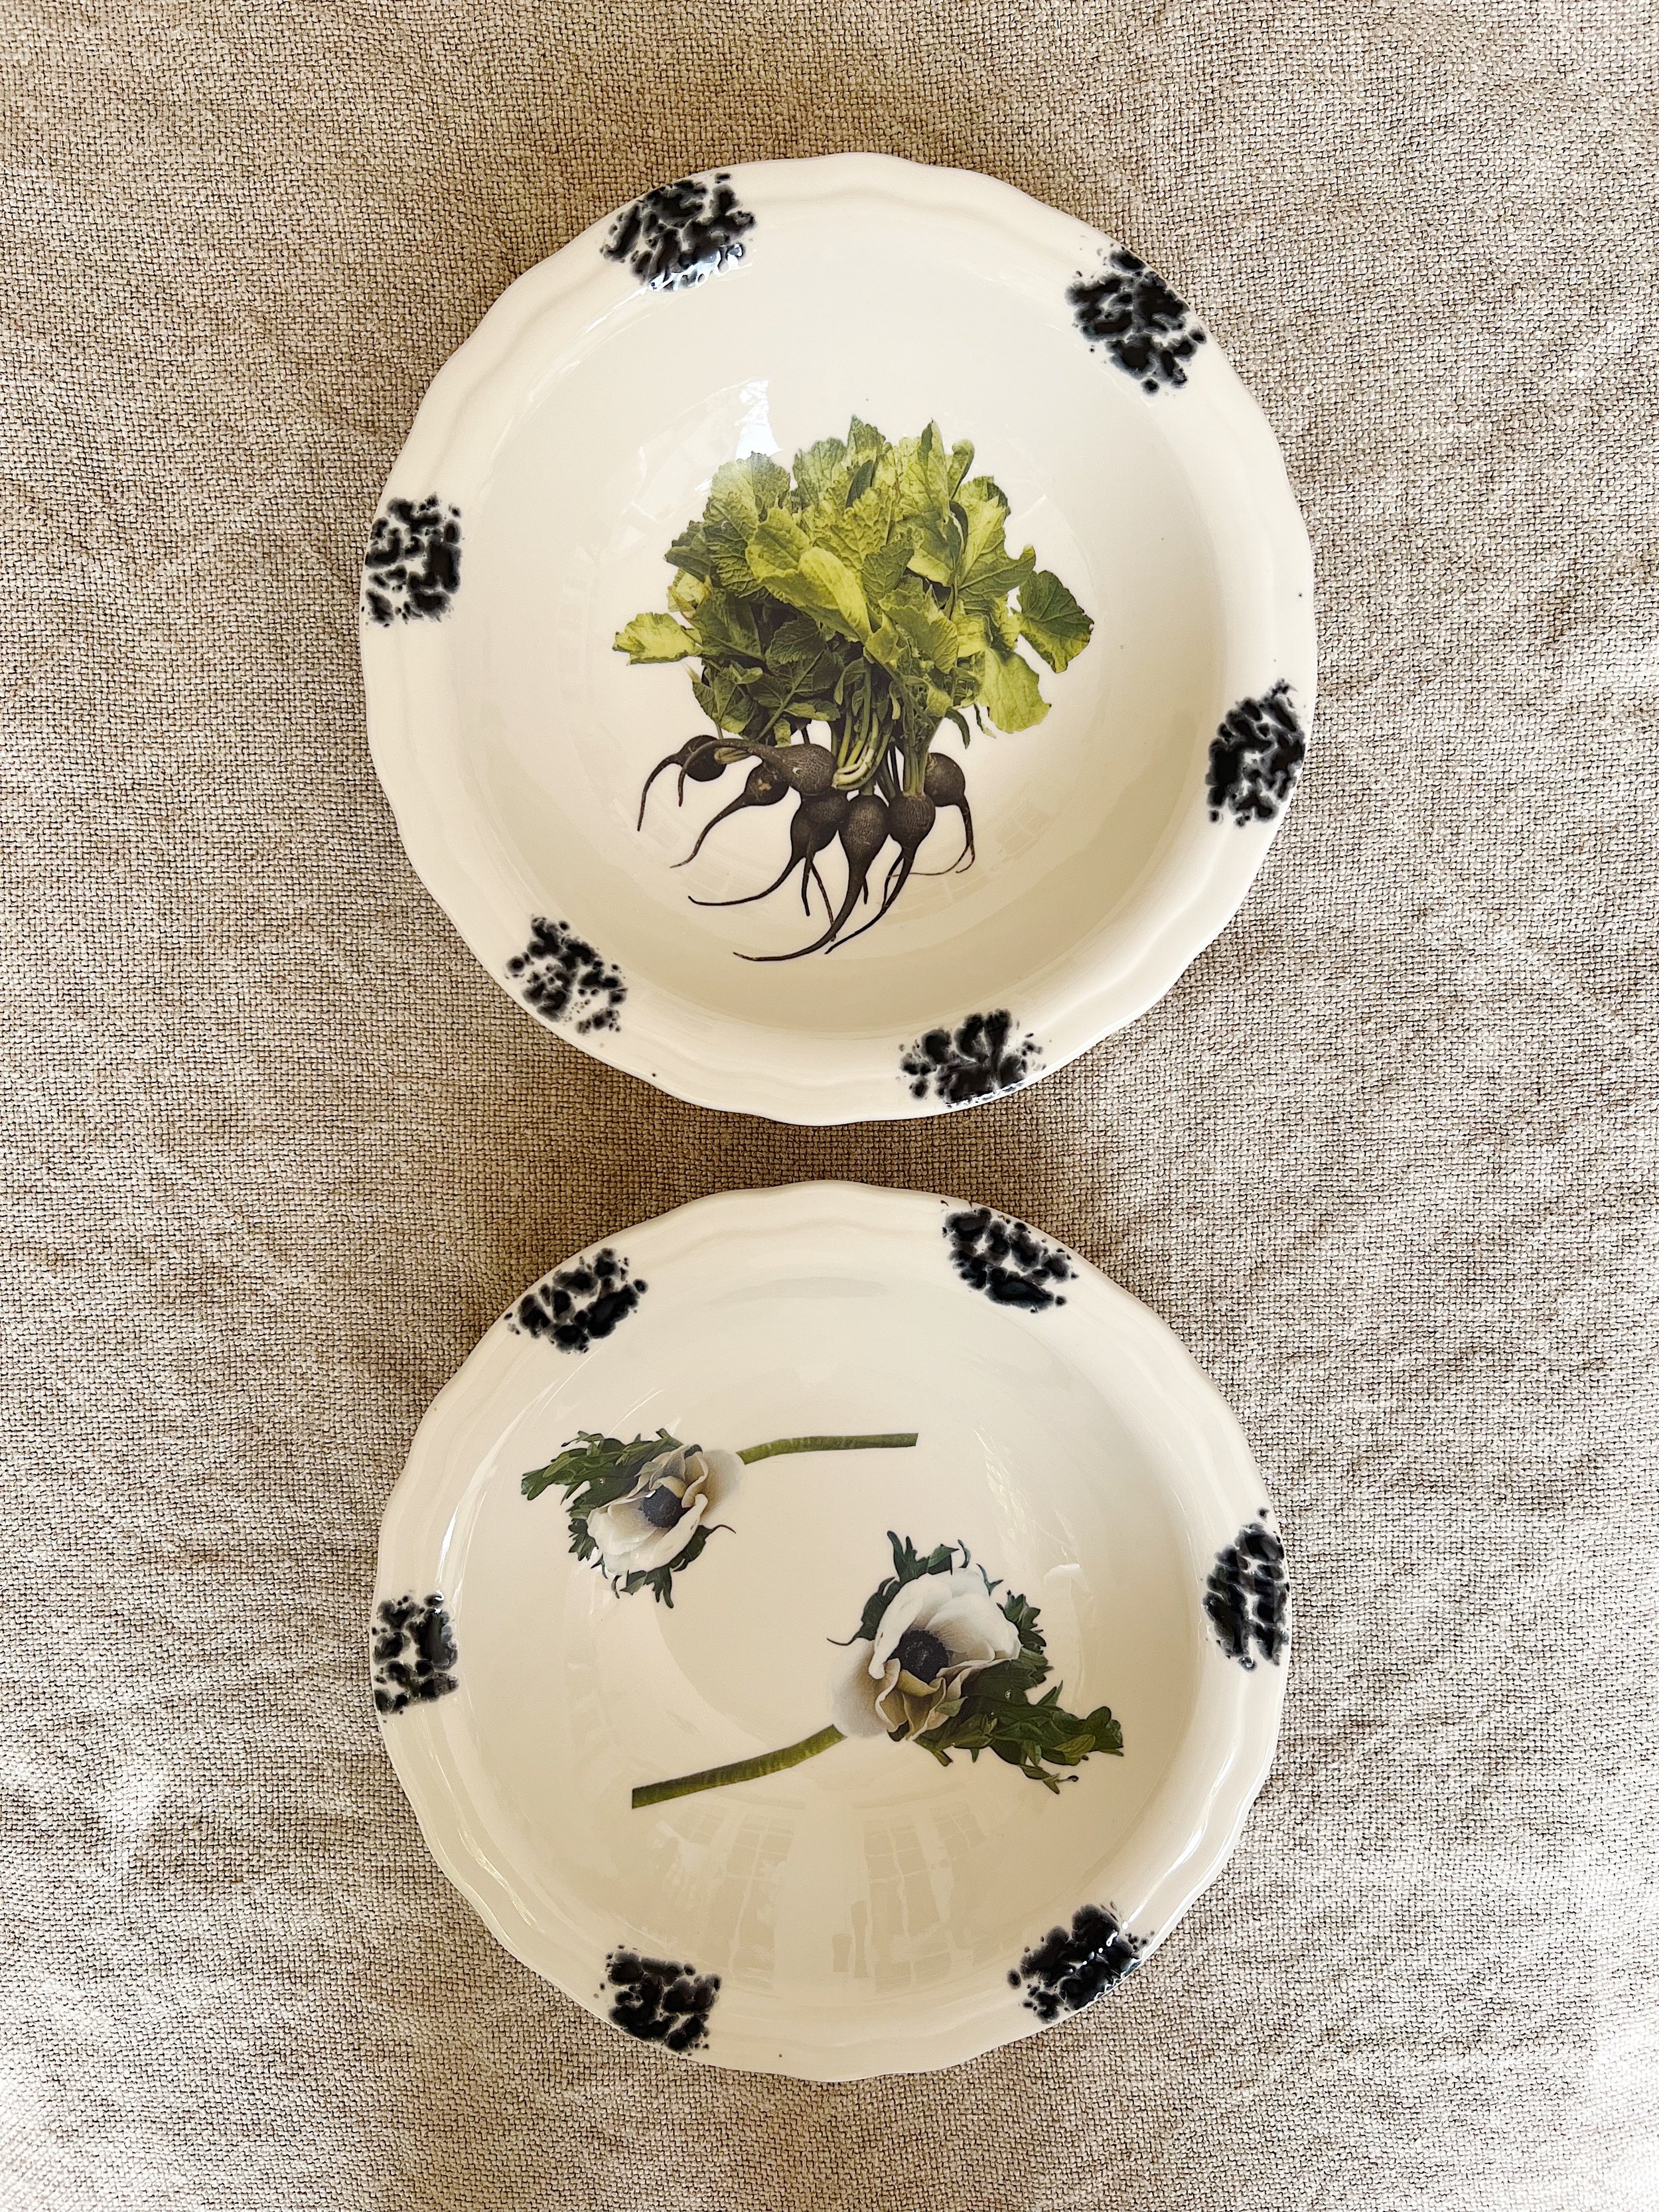 Vintage Black Radish and Anemone Ceramic Bowls